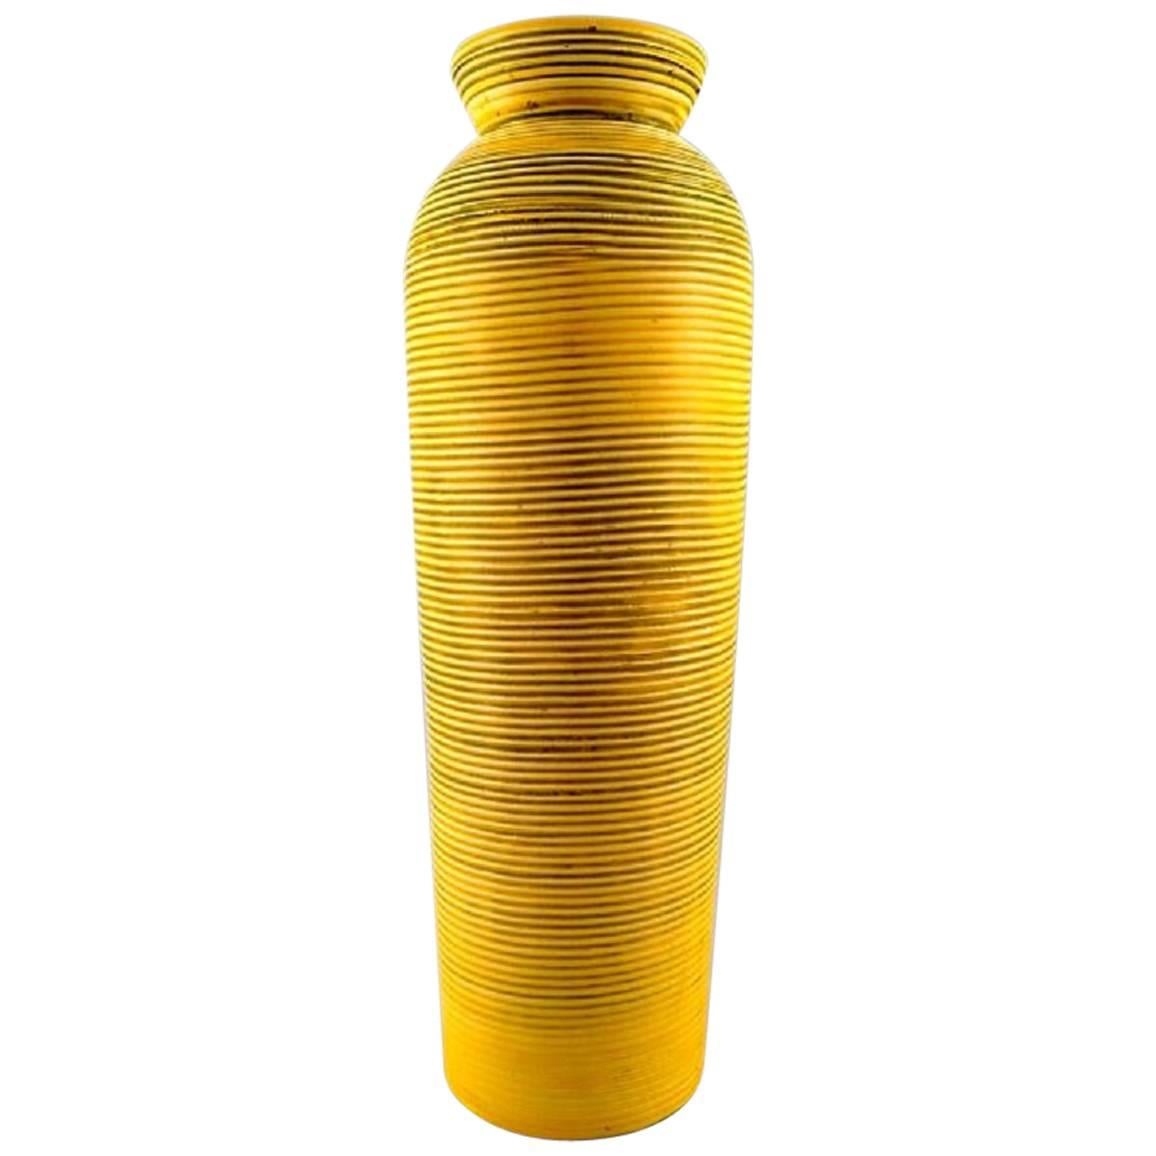 Gefle, Bo Fajans Floor Vase in Modern Design, Yellow-Glazed, Marked, 1950s-1960s